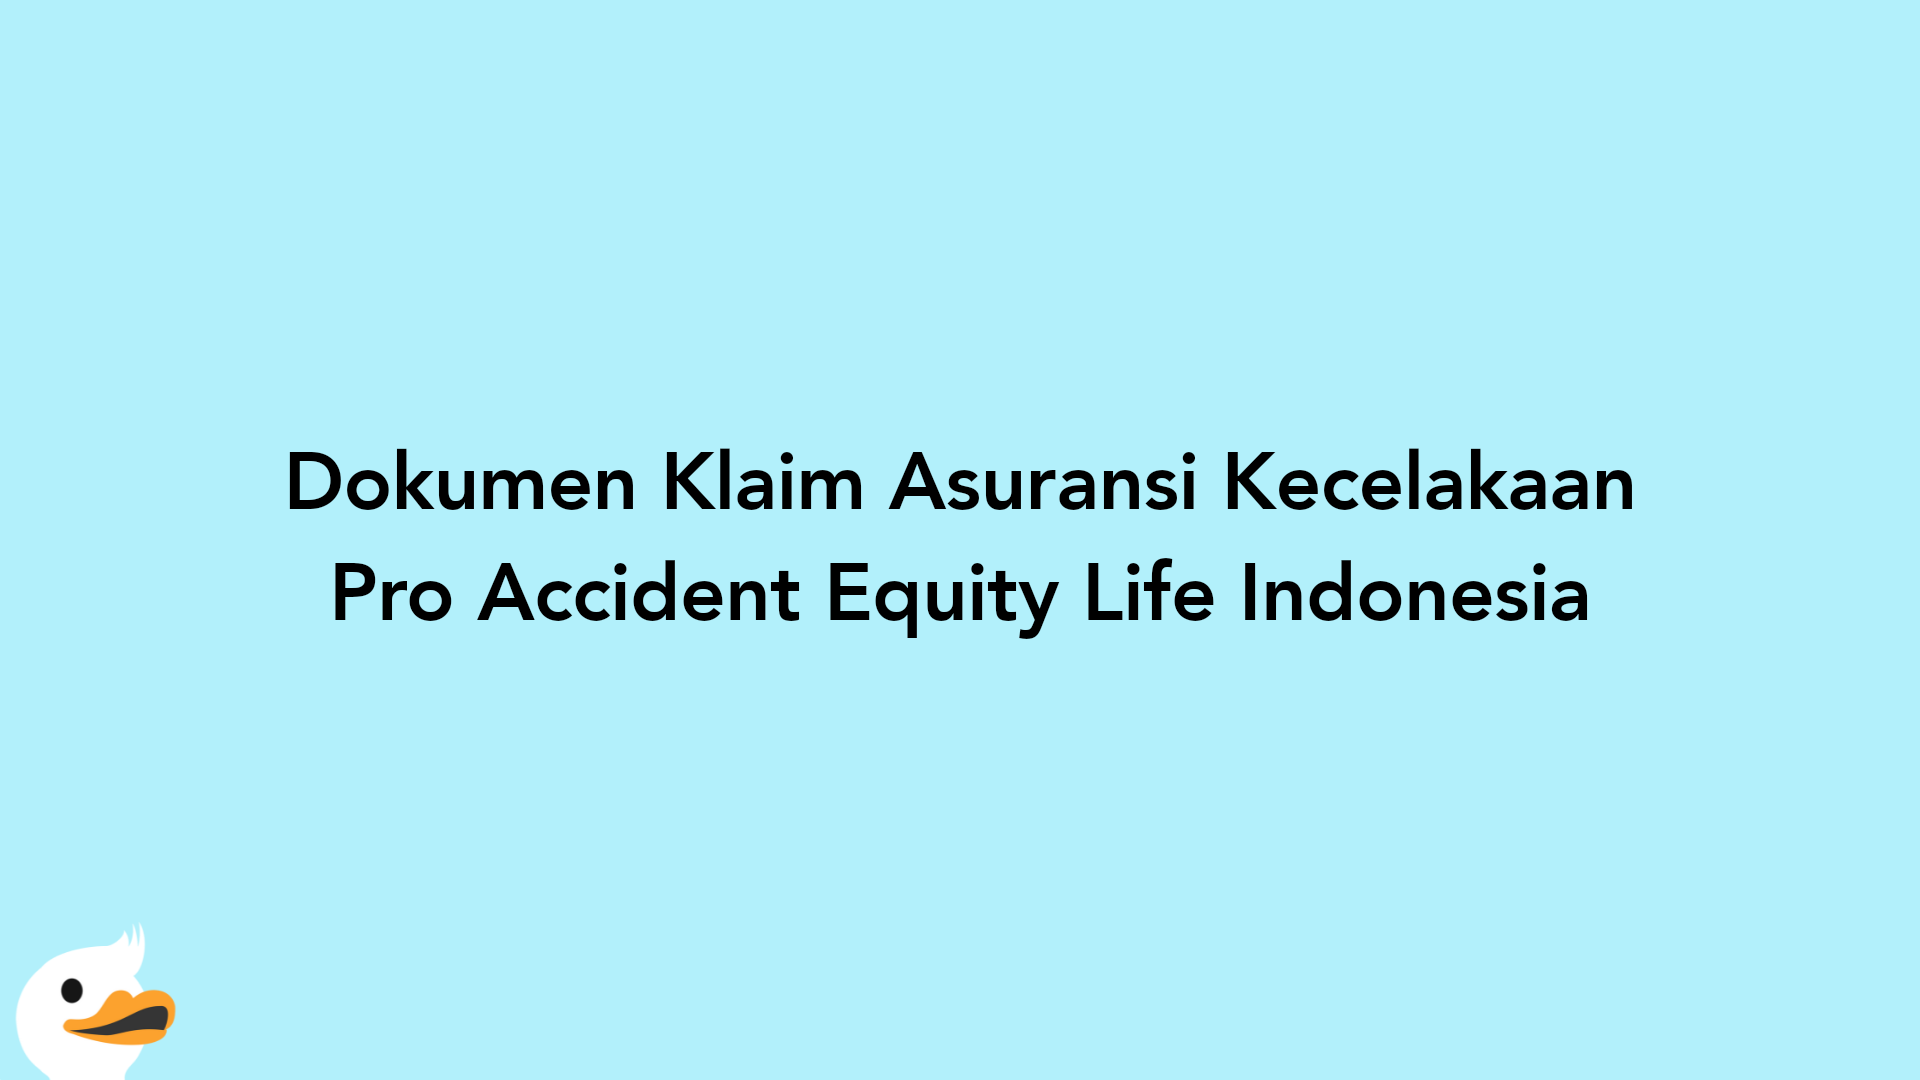 Dokumen Klaim Asuransi Kecelakaan Pro Accident Equity Life Indonesia